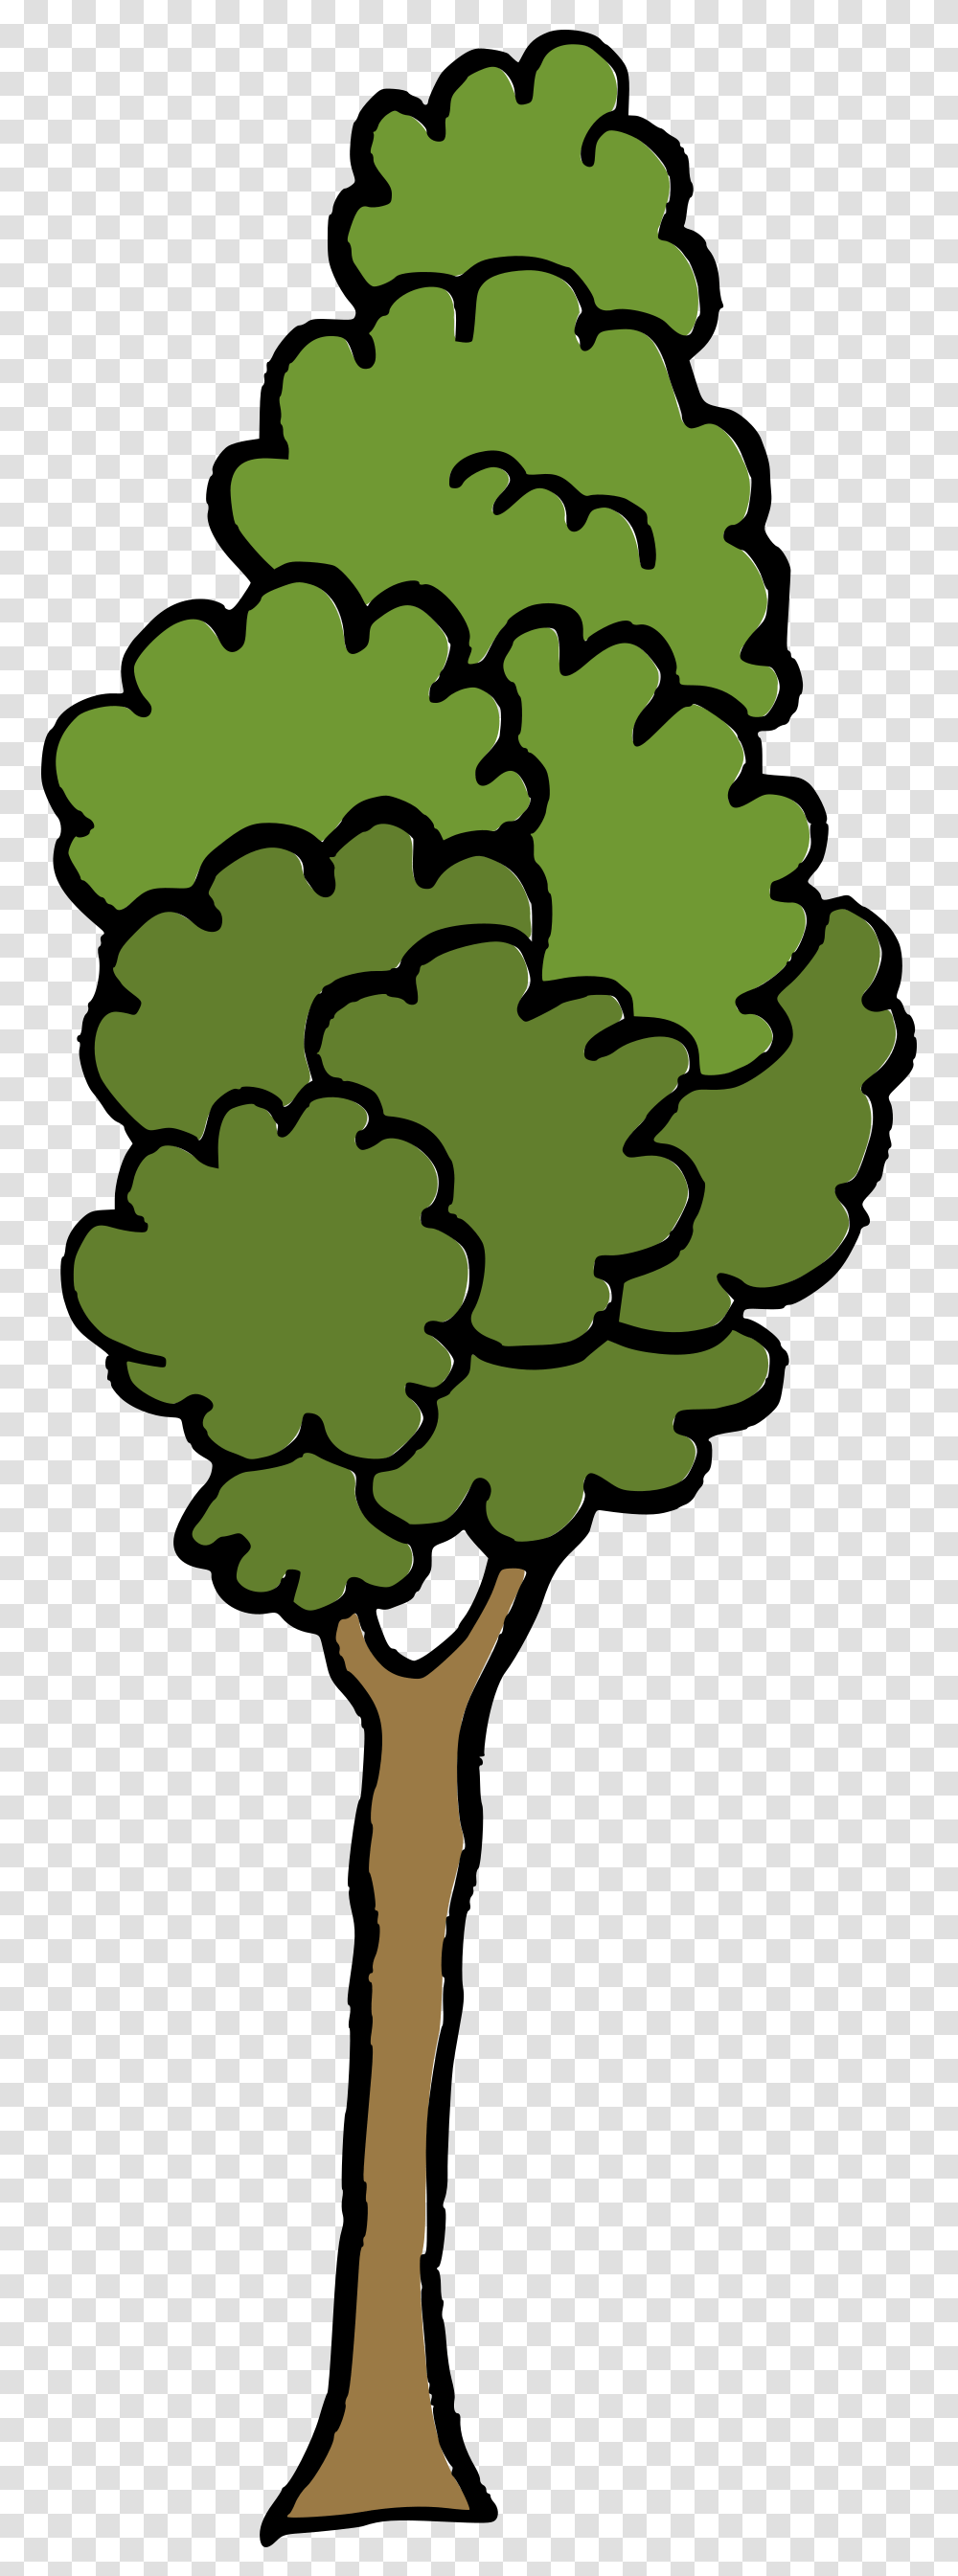 Tree Vector Svg Cartoon Tree, Plant, Green, Pineapple, Fruit Transparent Png